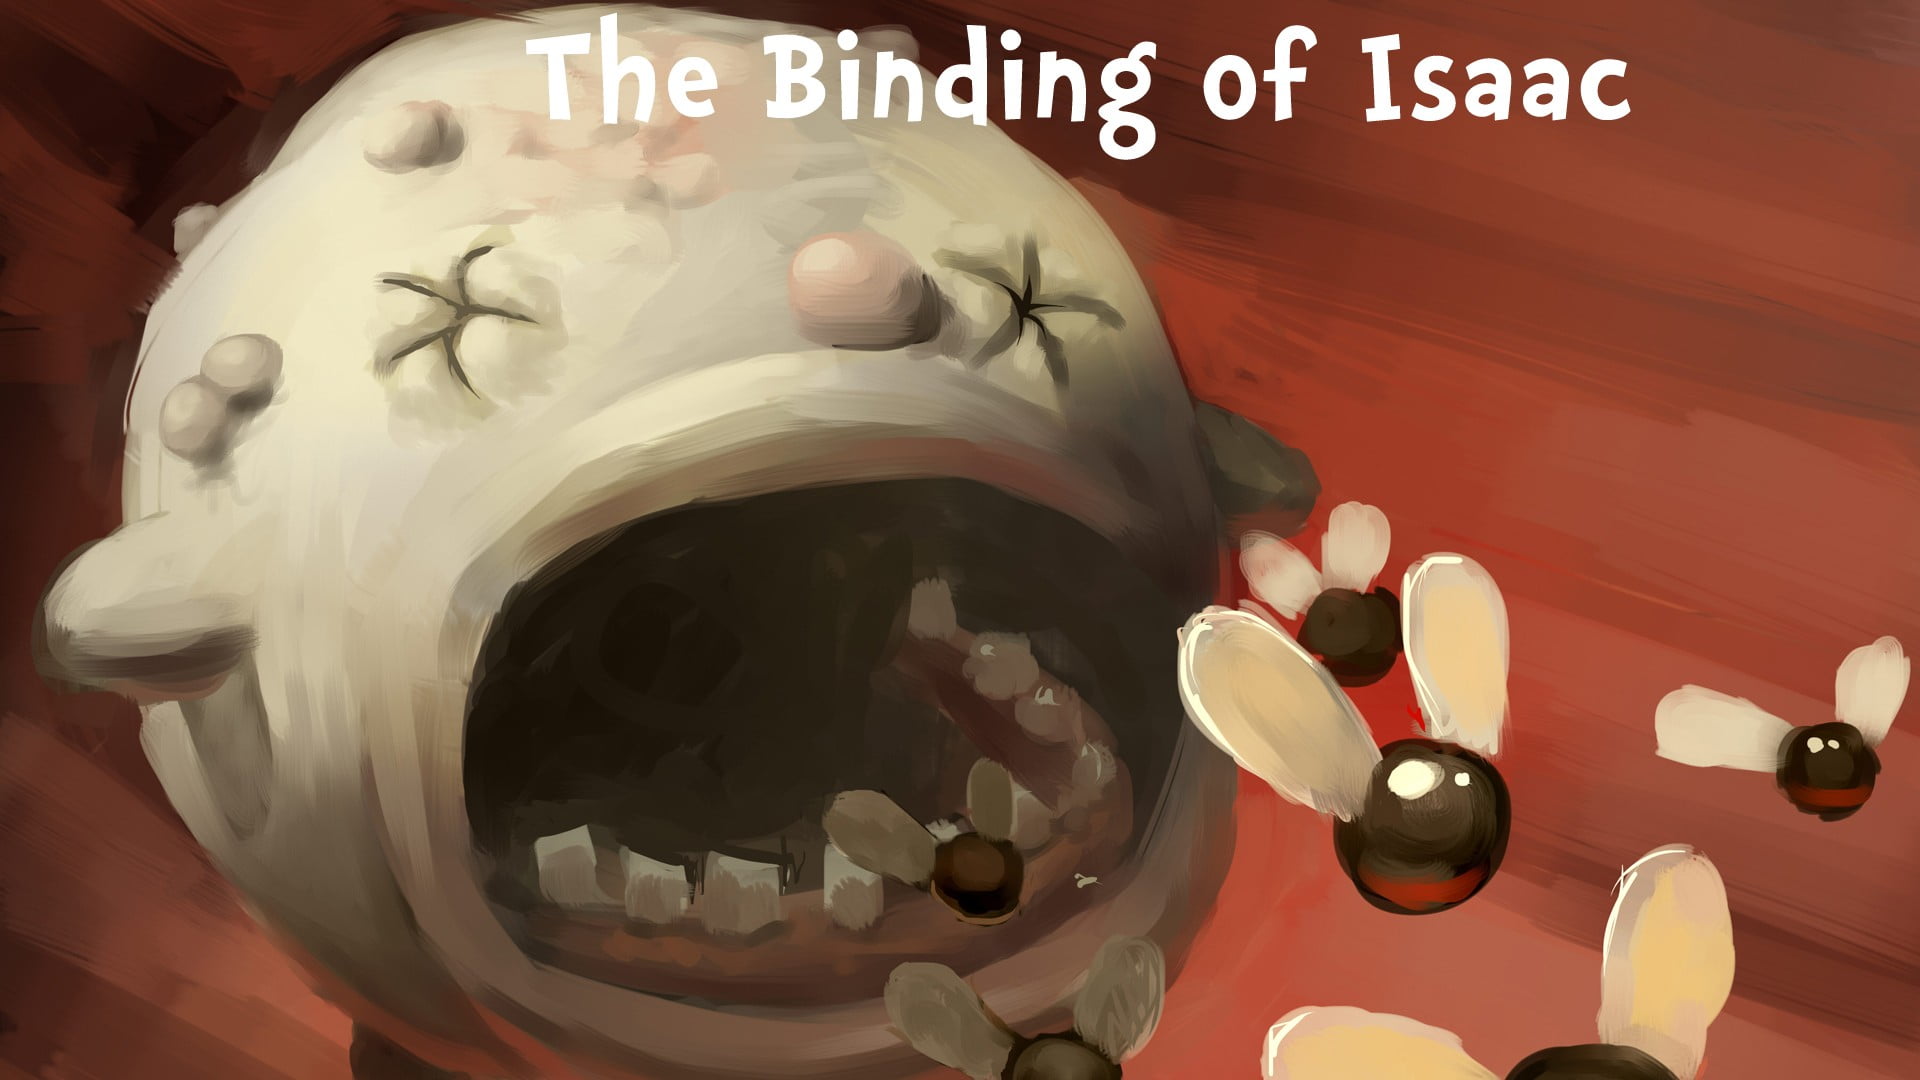 The binding of Isaac painting, Binding of Isaac, Duke of Flies, flies